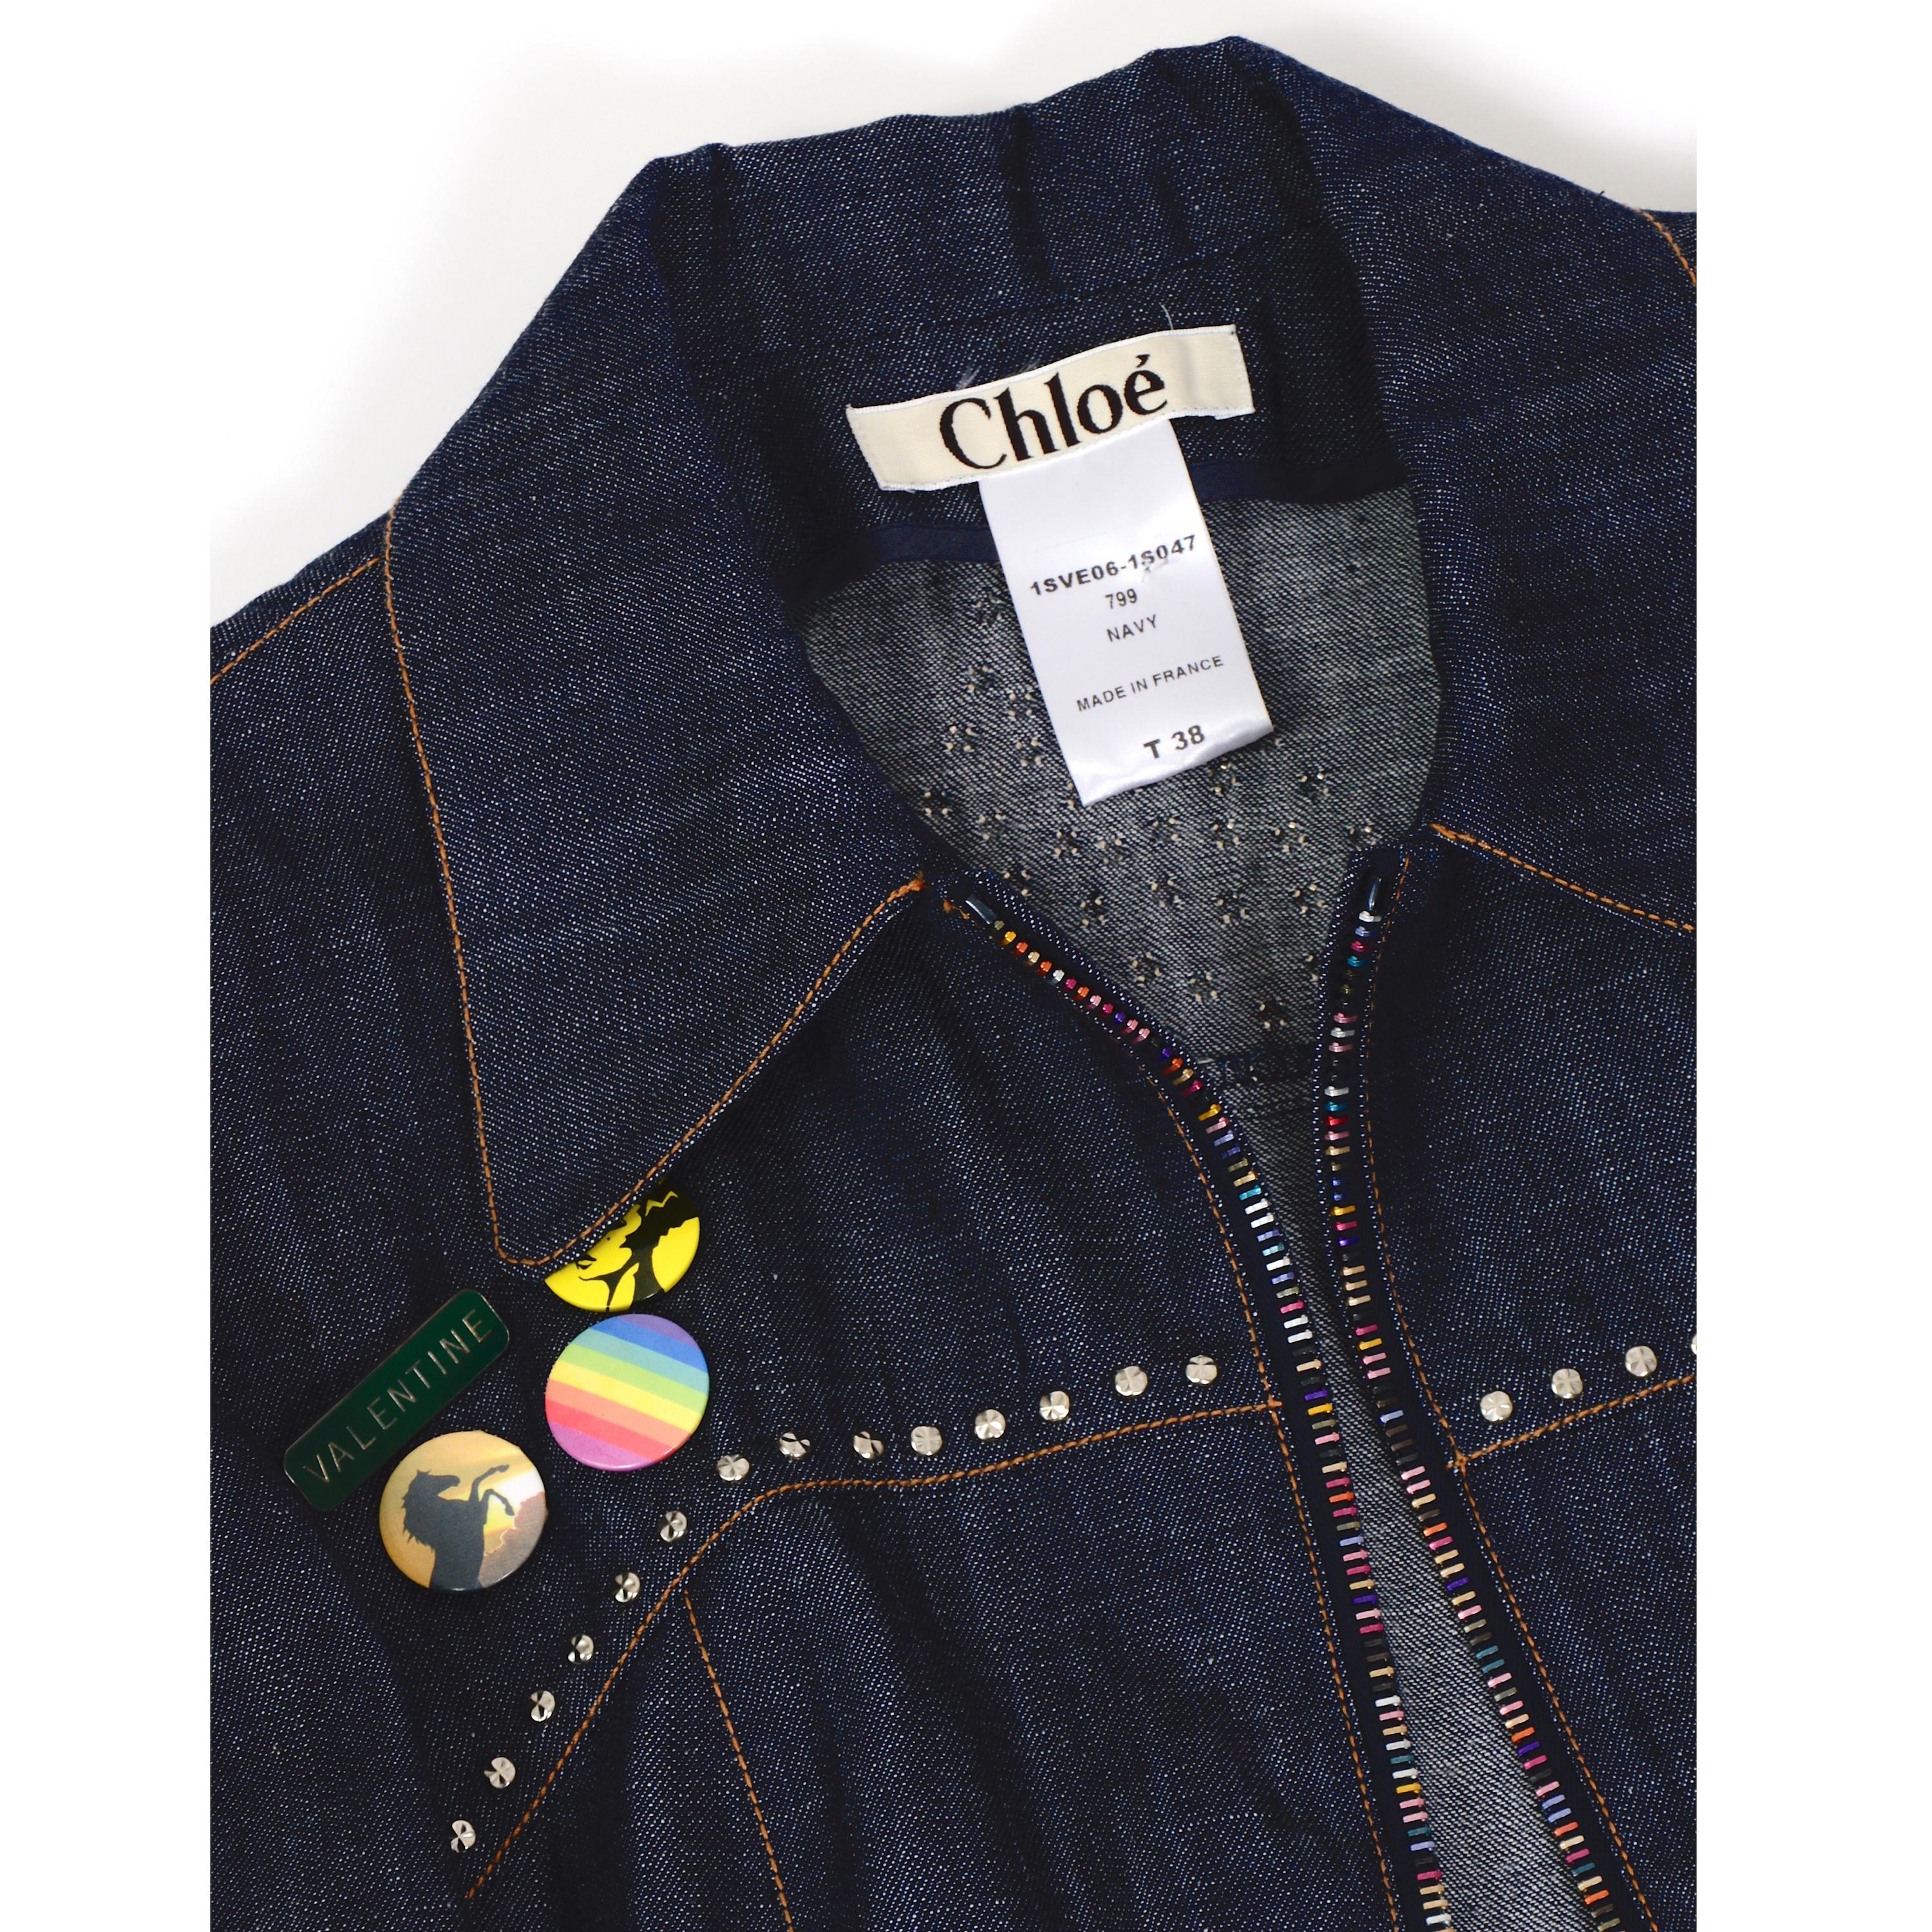 Ensemble veste et jupe en jean vintage 2001 Chloé by Stella McCartney en vente 9